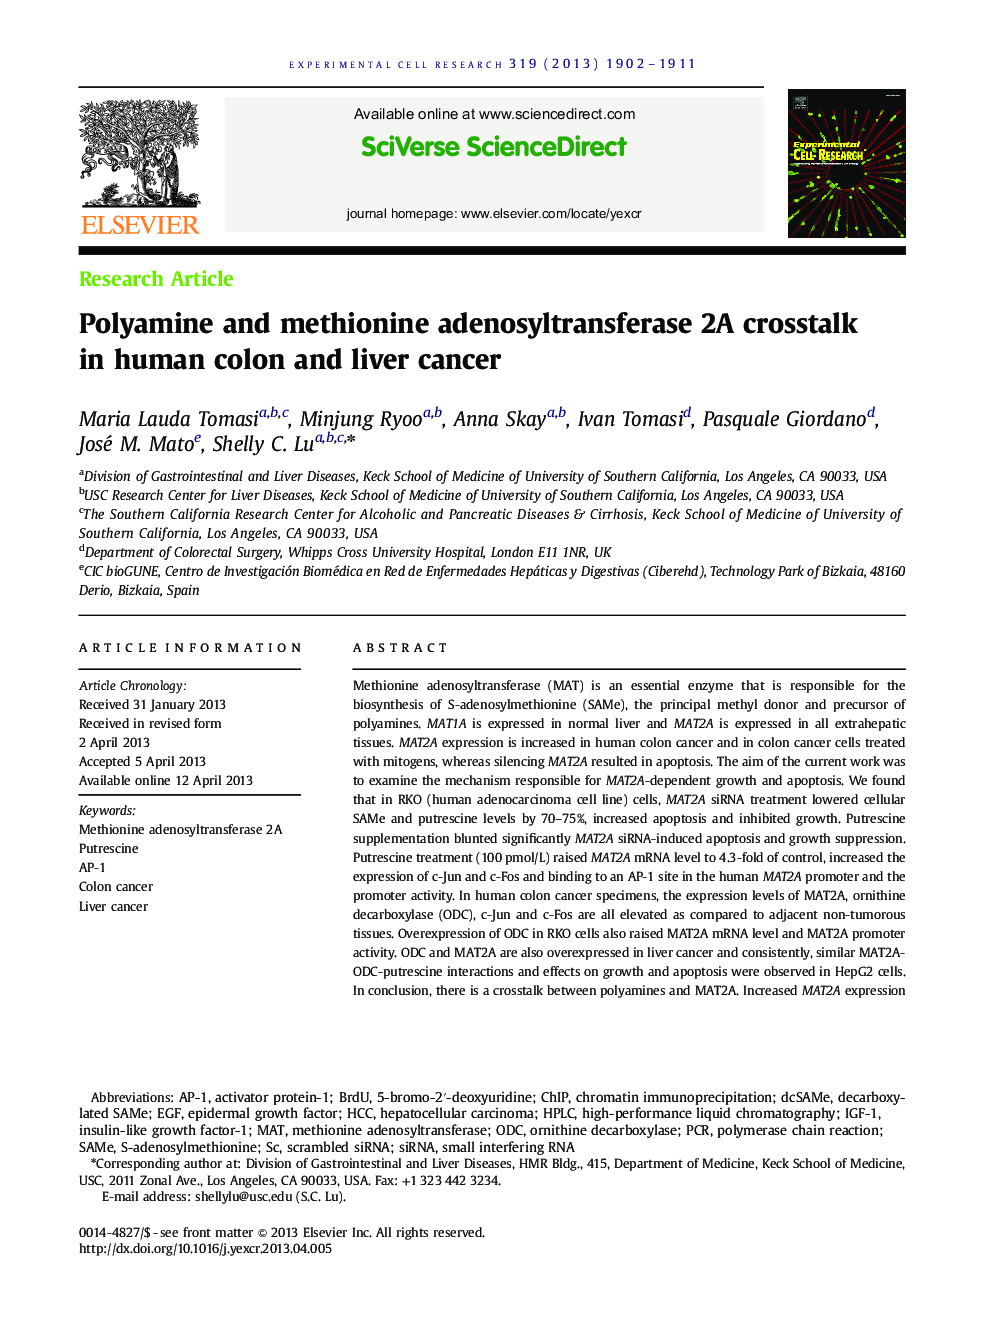 Polyamine and methionine adenosyltransferase 2A crosstalk in human colon and liver cancer